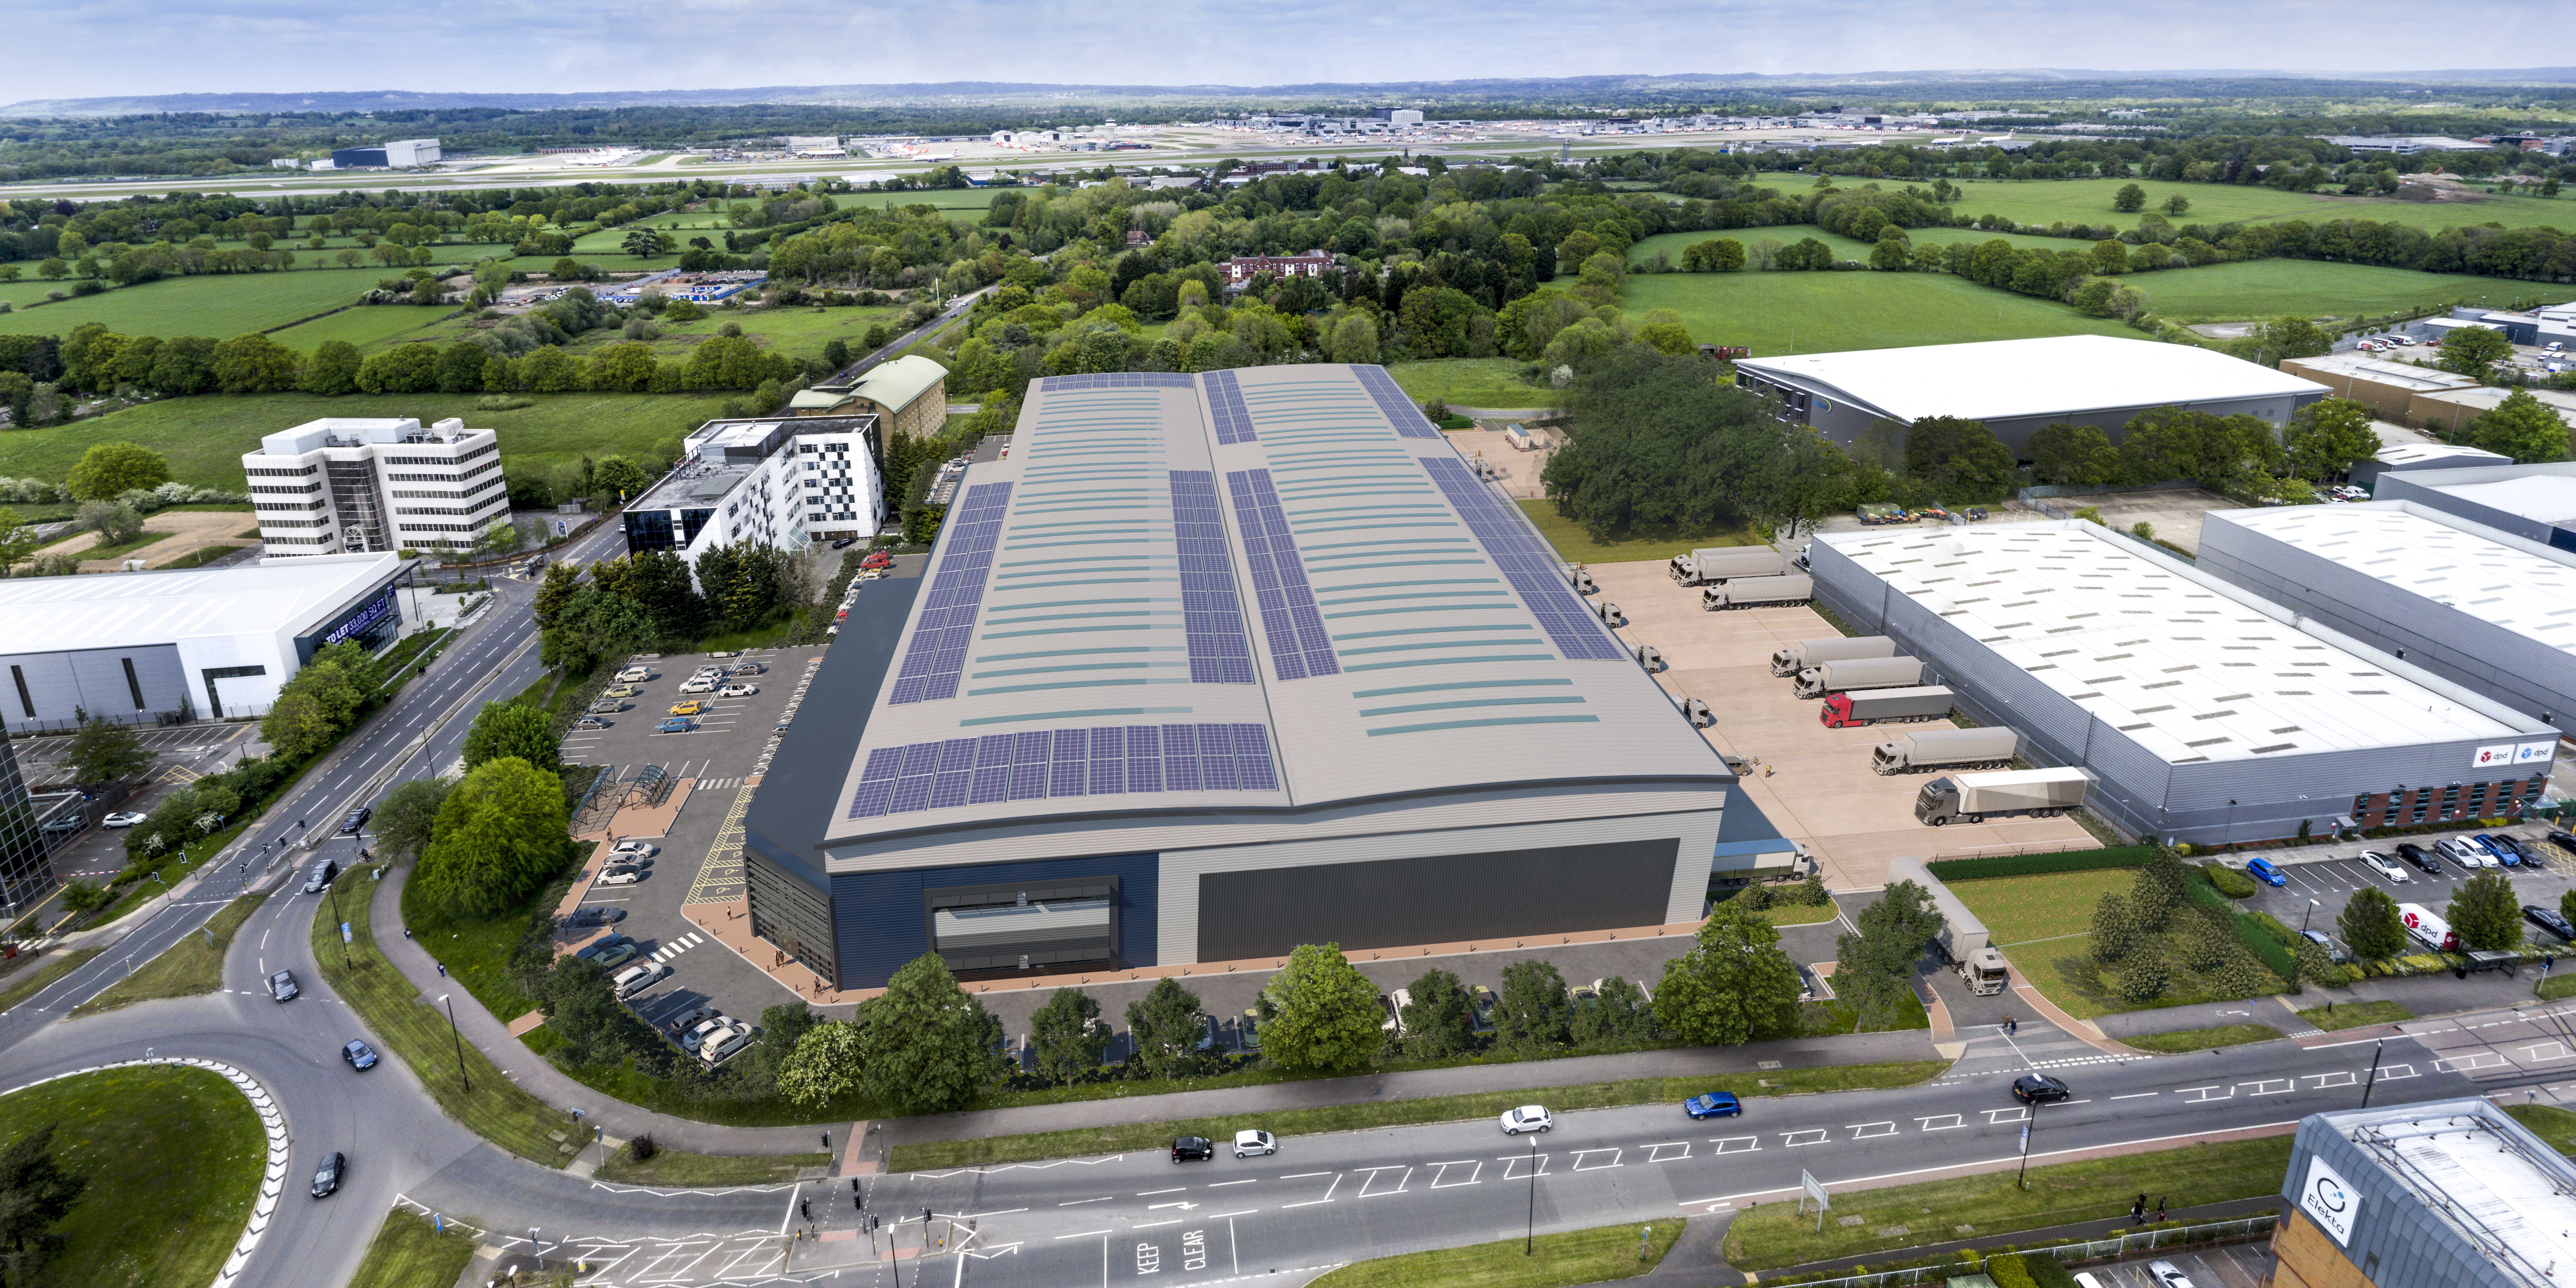 Panattoni wins planning consent for 200,000 sq ft speculative logistics development in Crawley